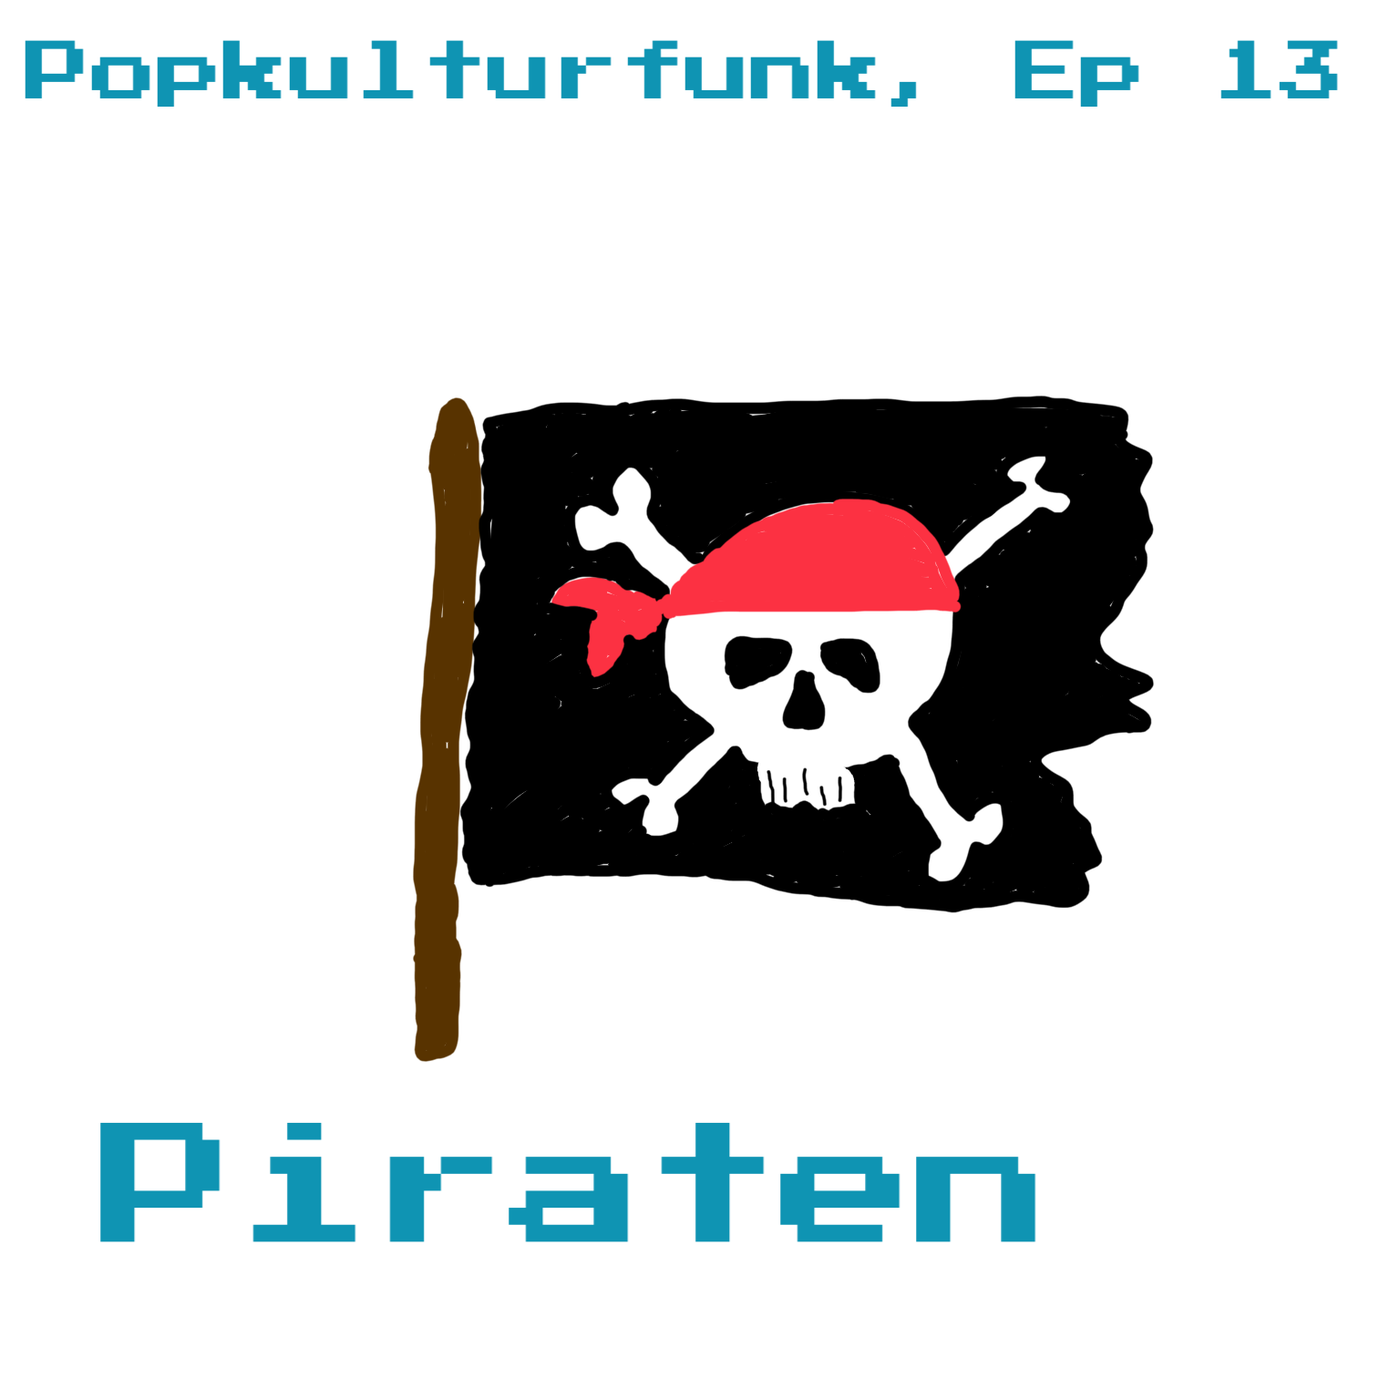 Episode 13: Piraten